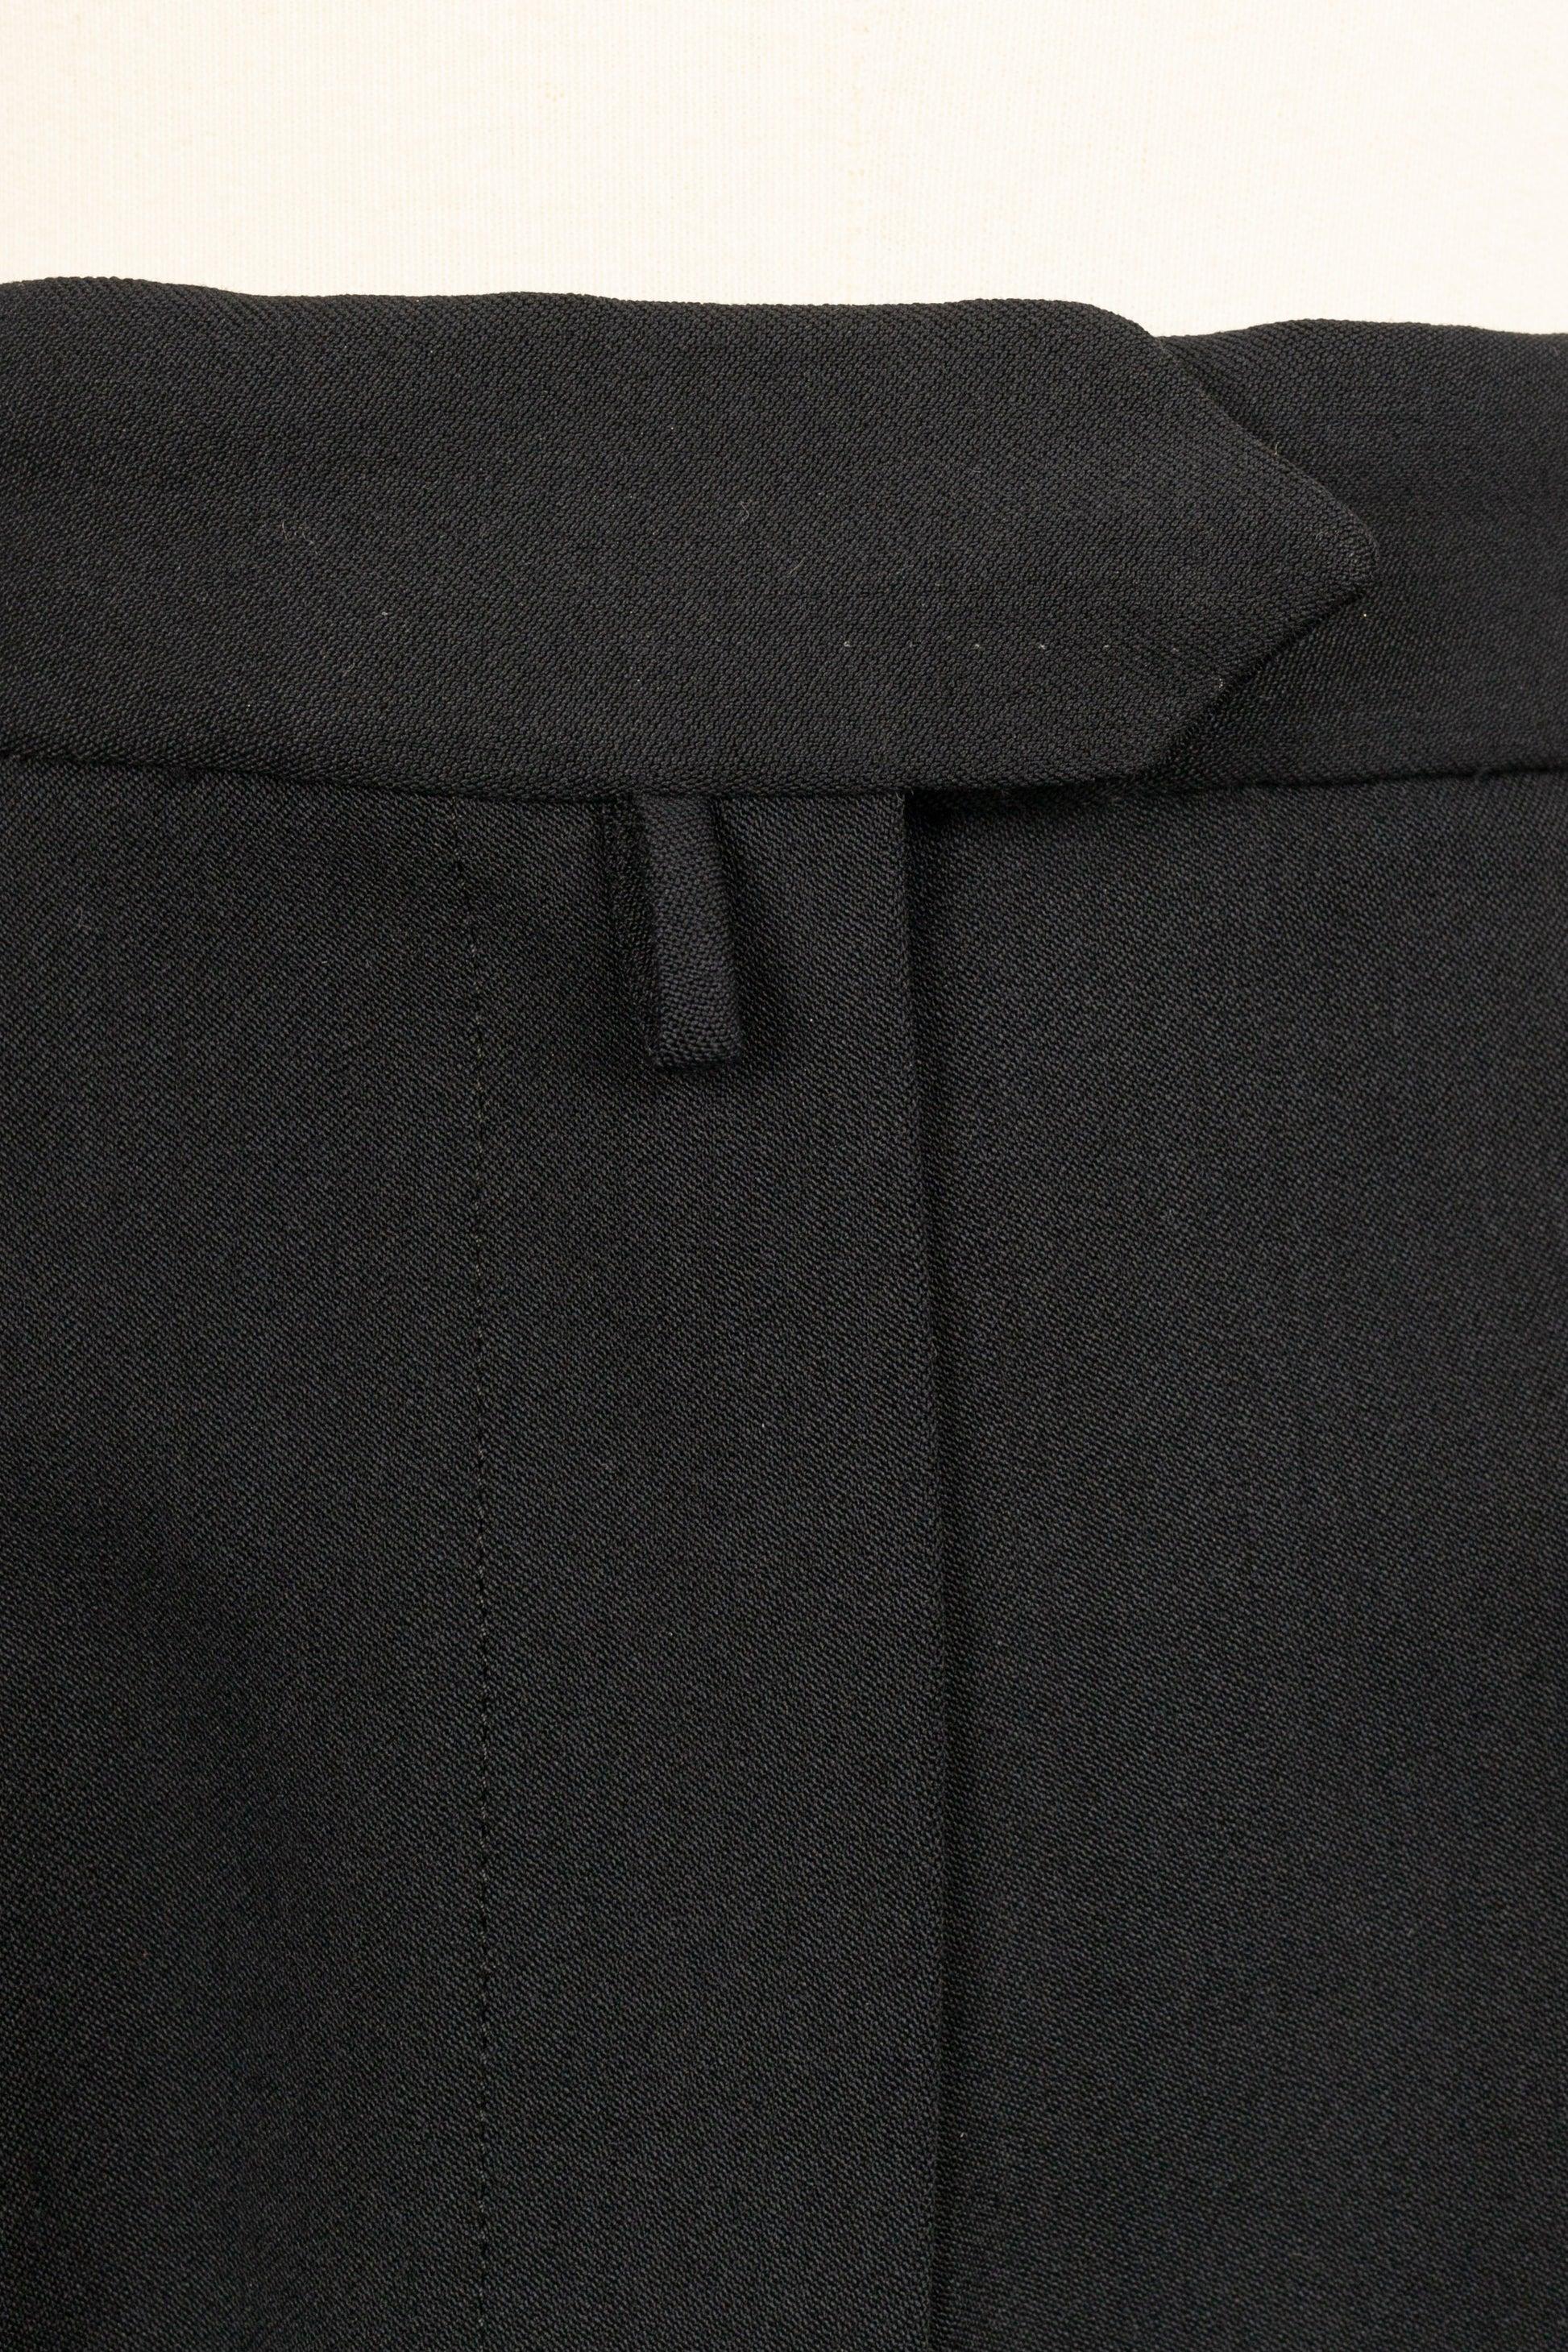 Christian Dior Black Blended Wool Pants For Sale 1